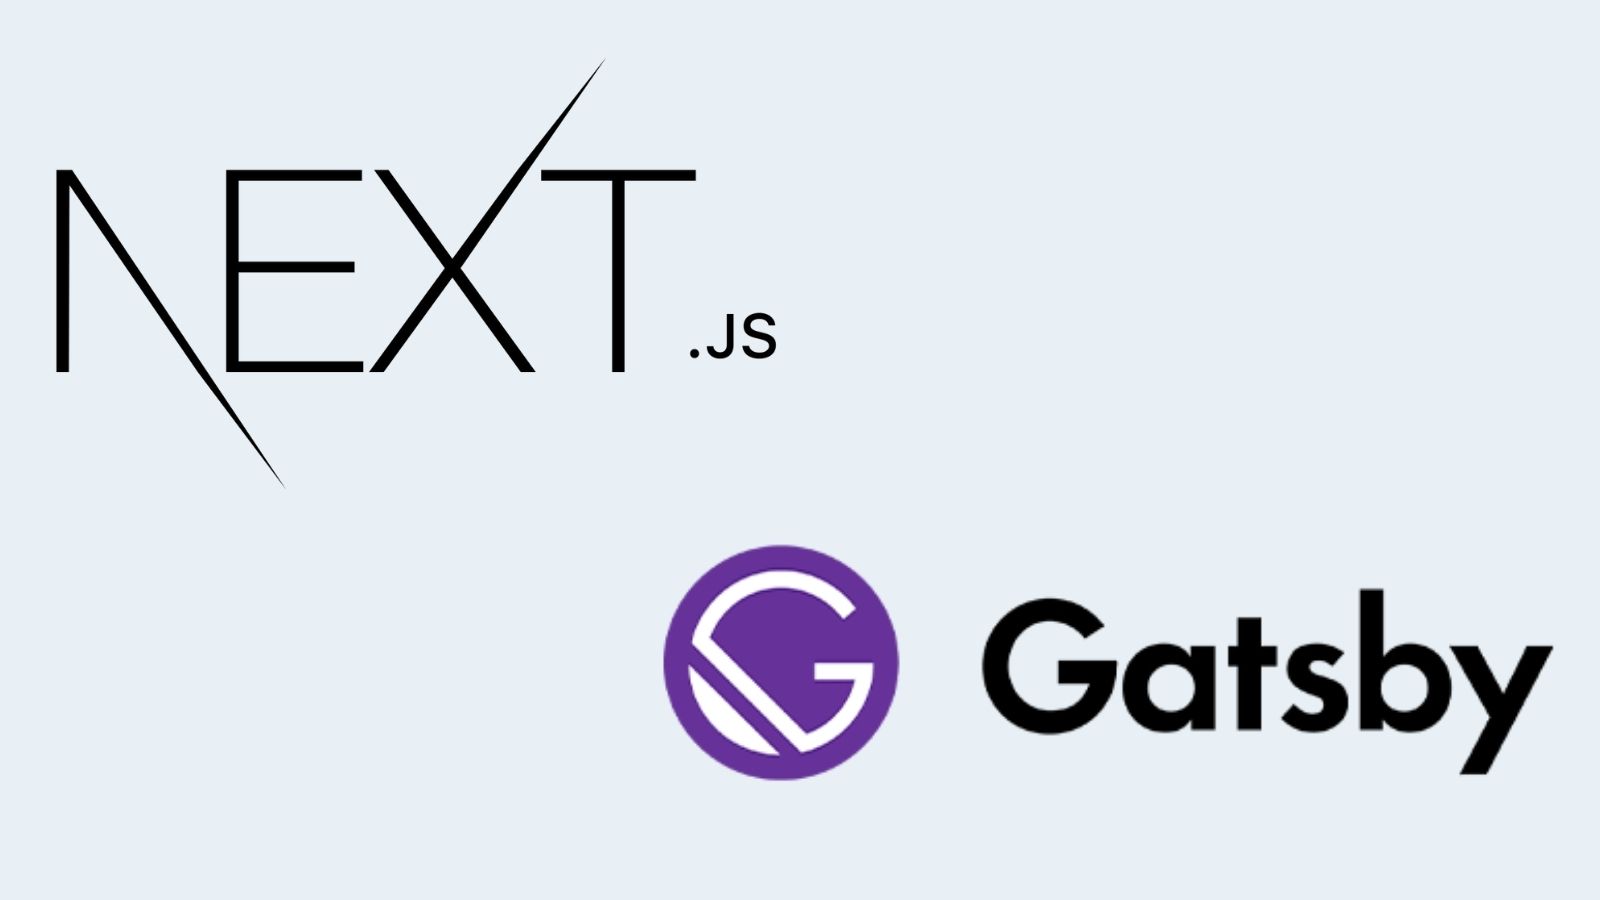 Gtasby and Next.js logos on agilitycms.com